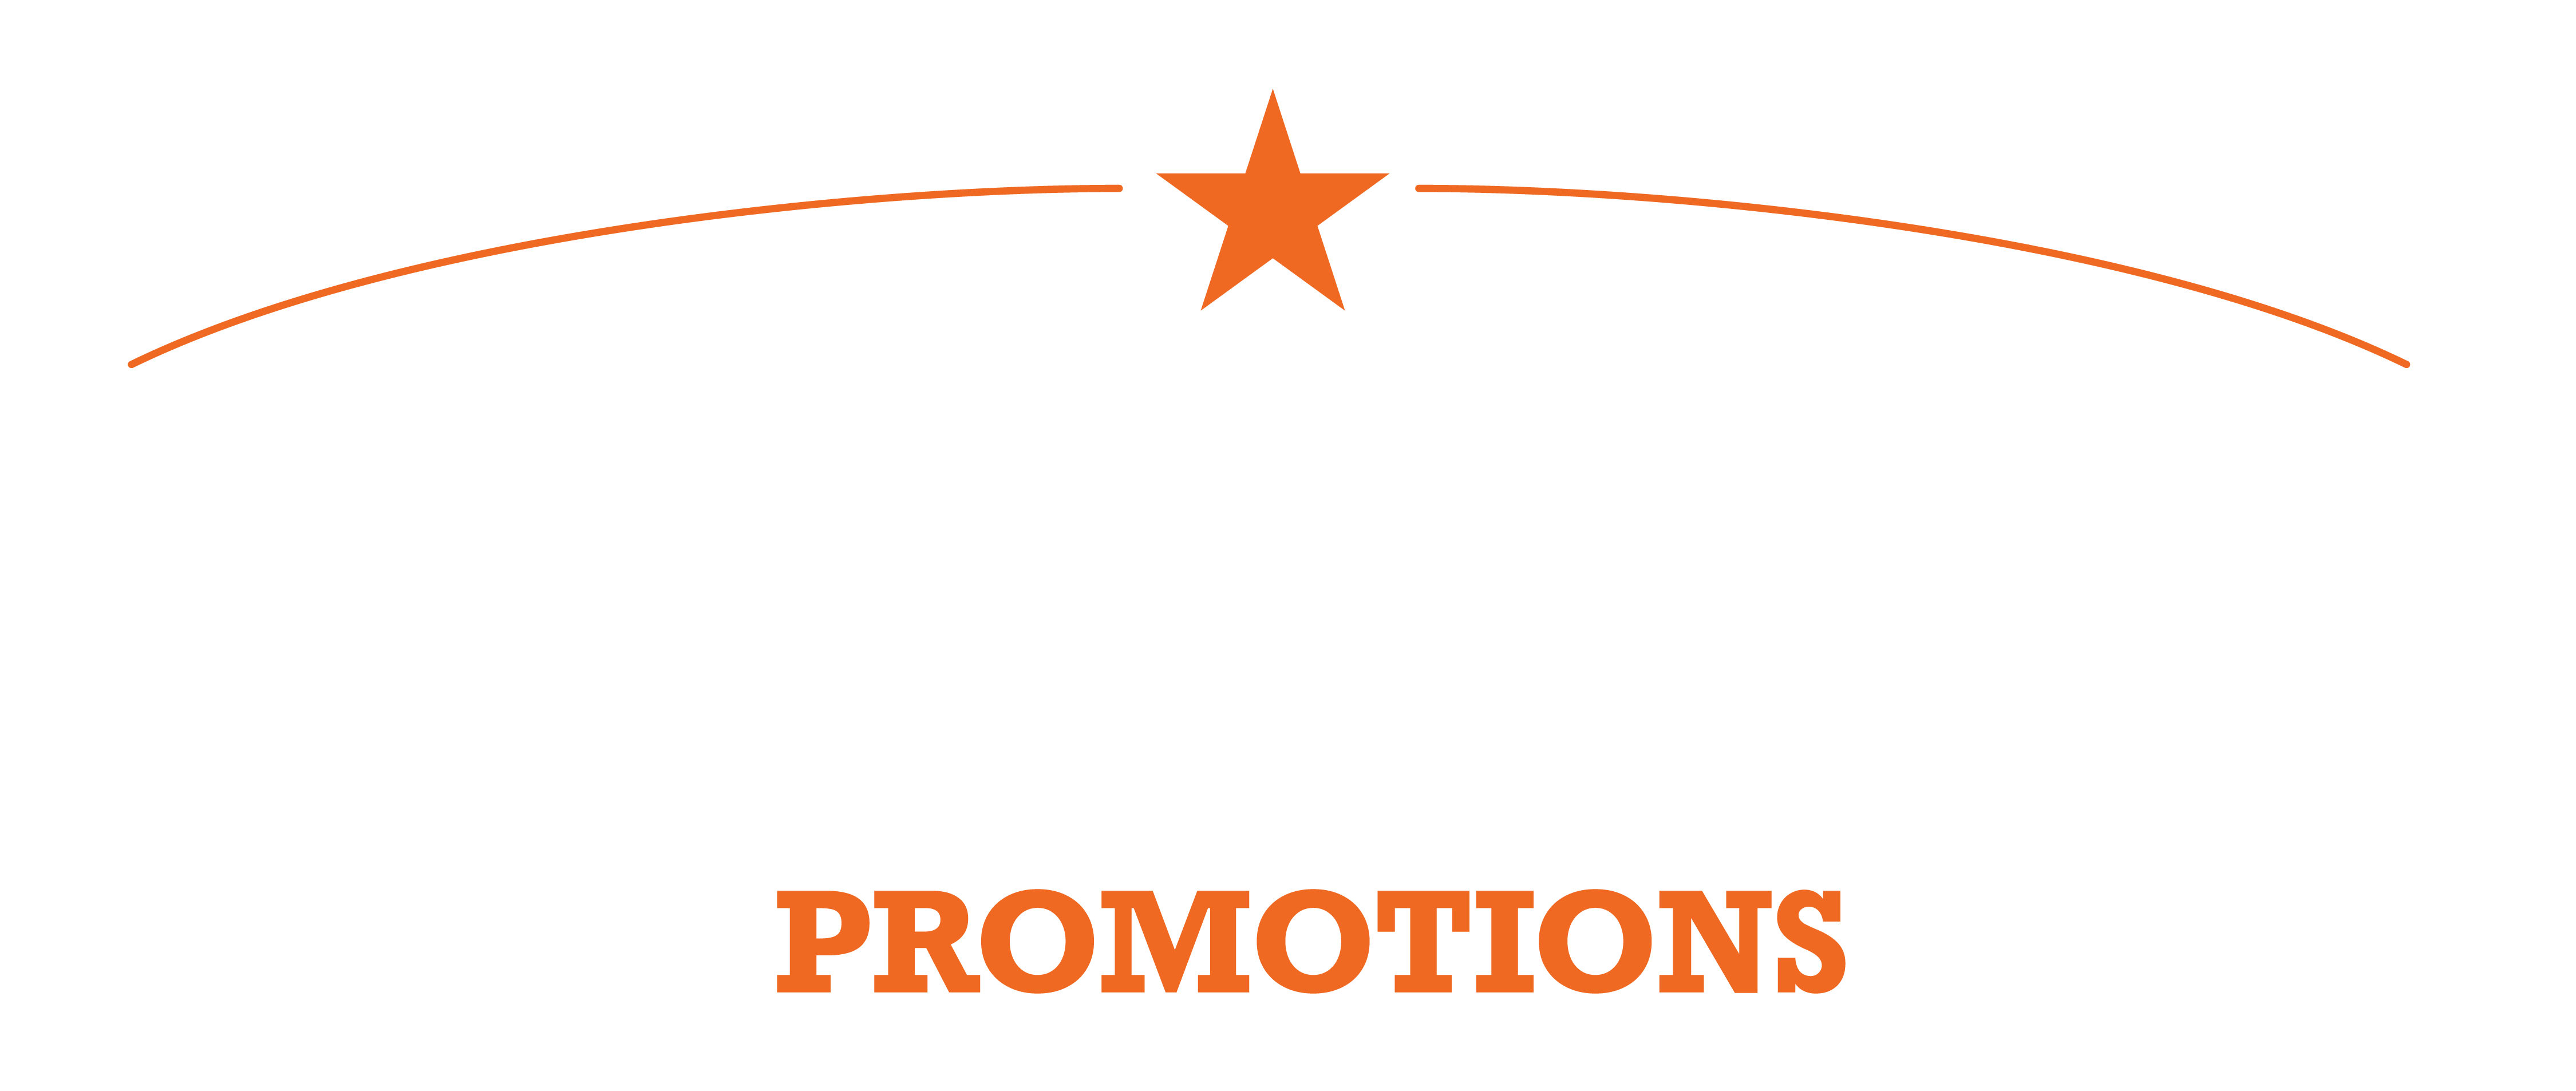 Joe Hand Promotions Site